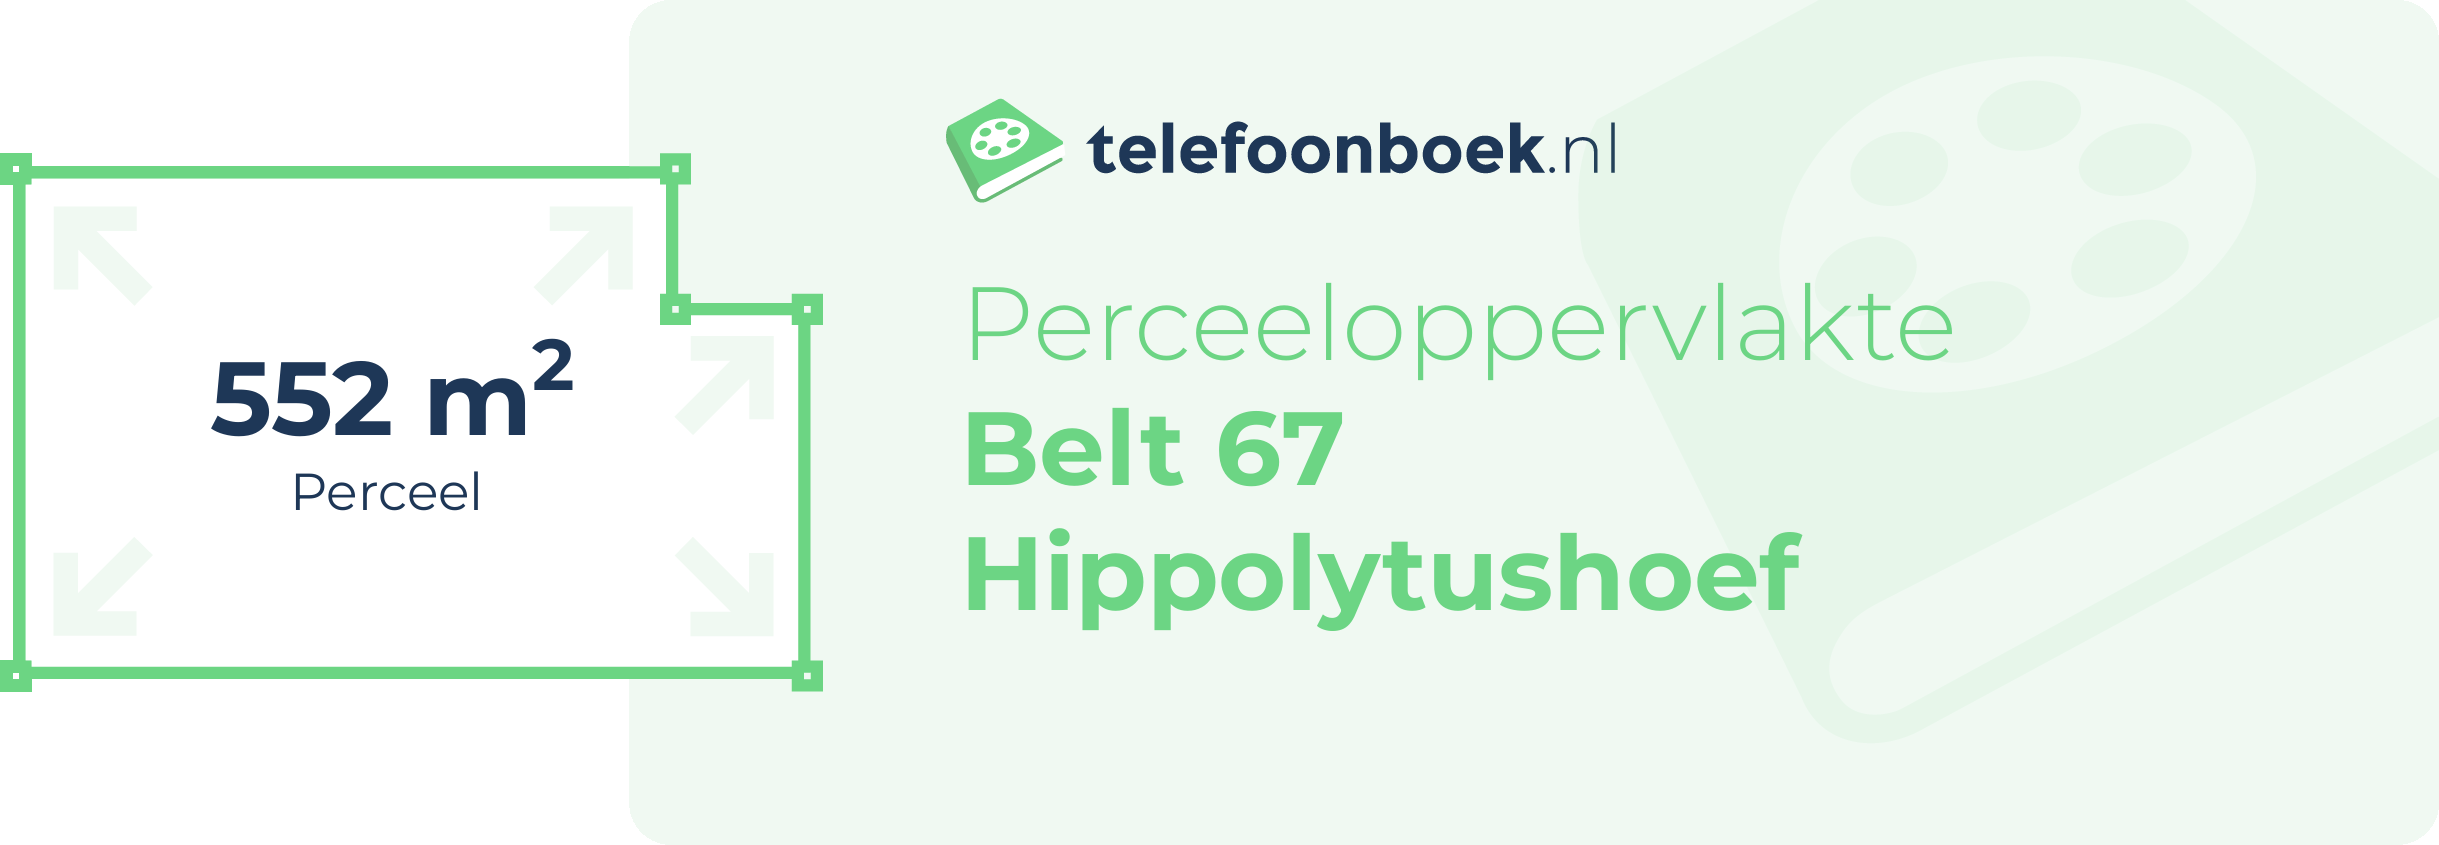 Perceeloppervlakte Belt 67 Hippolytushoef